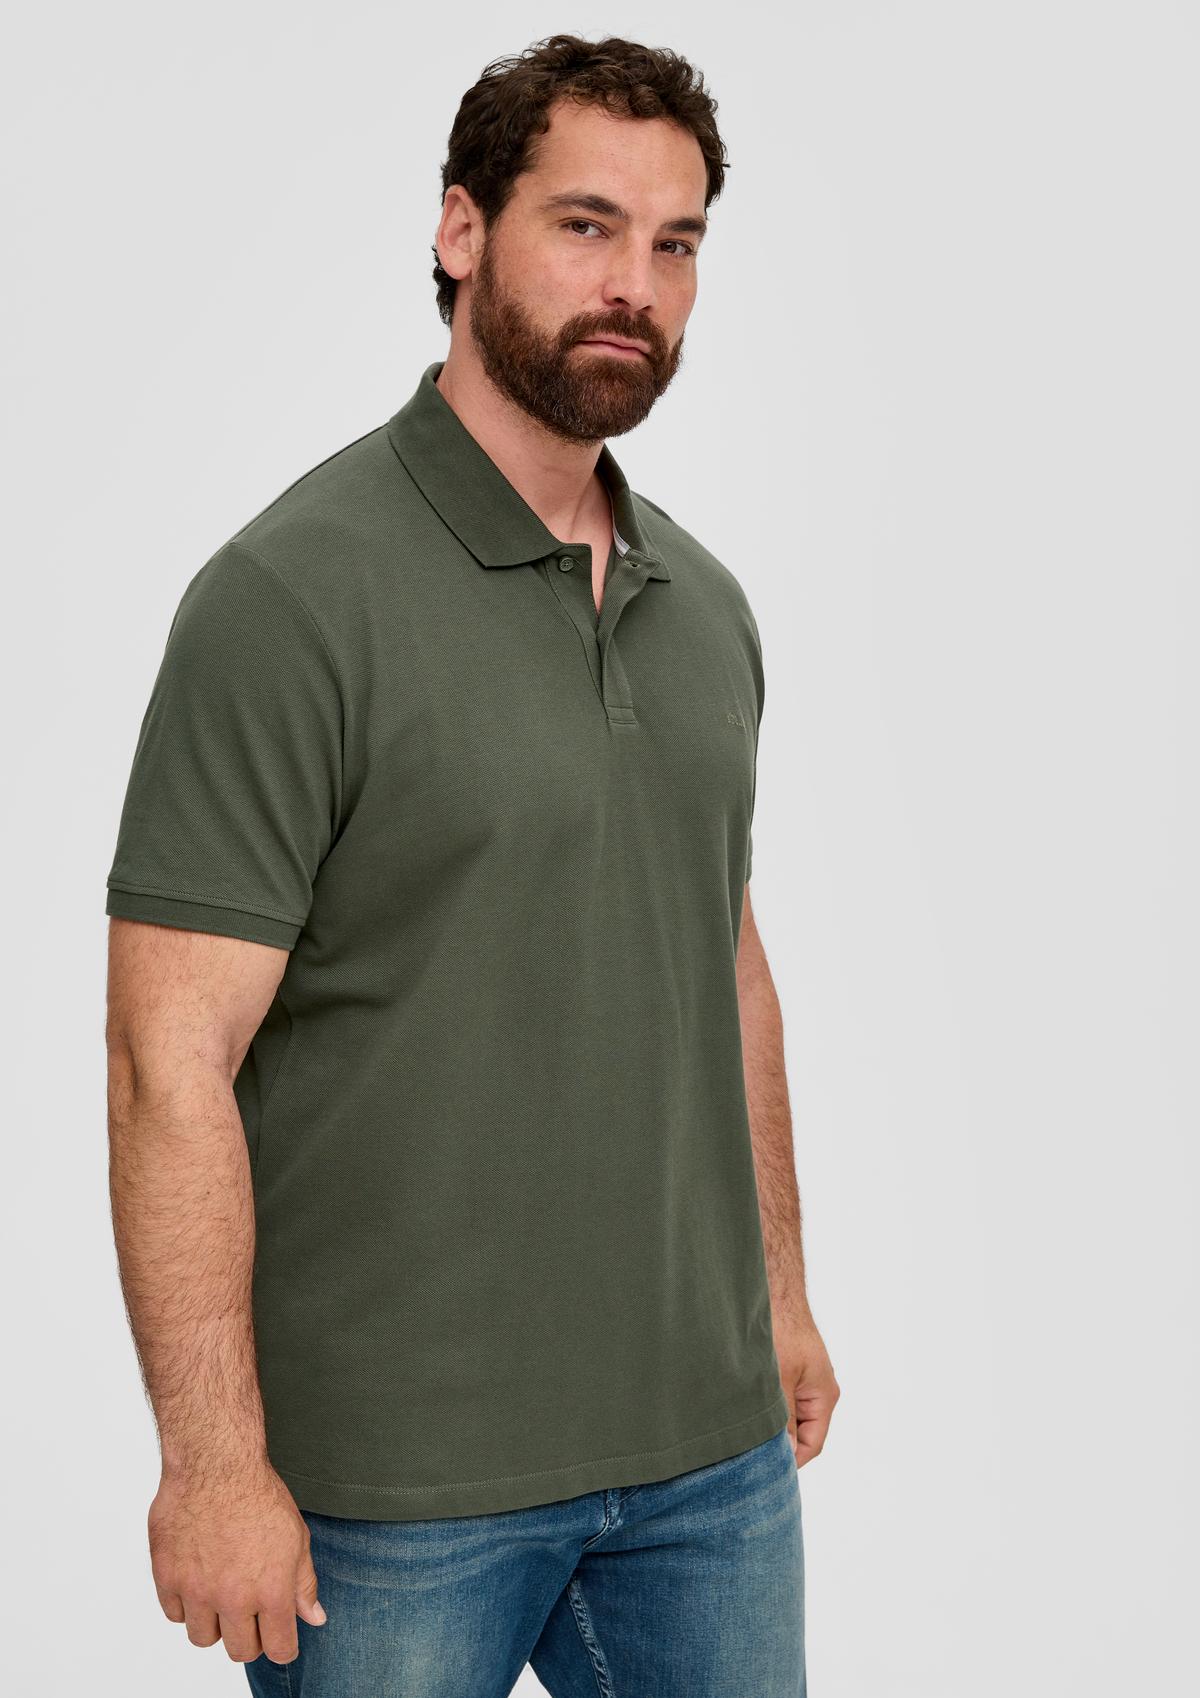 print - Polo a with navy shirt minimalist